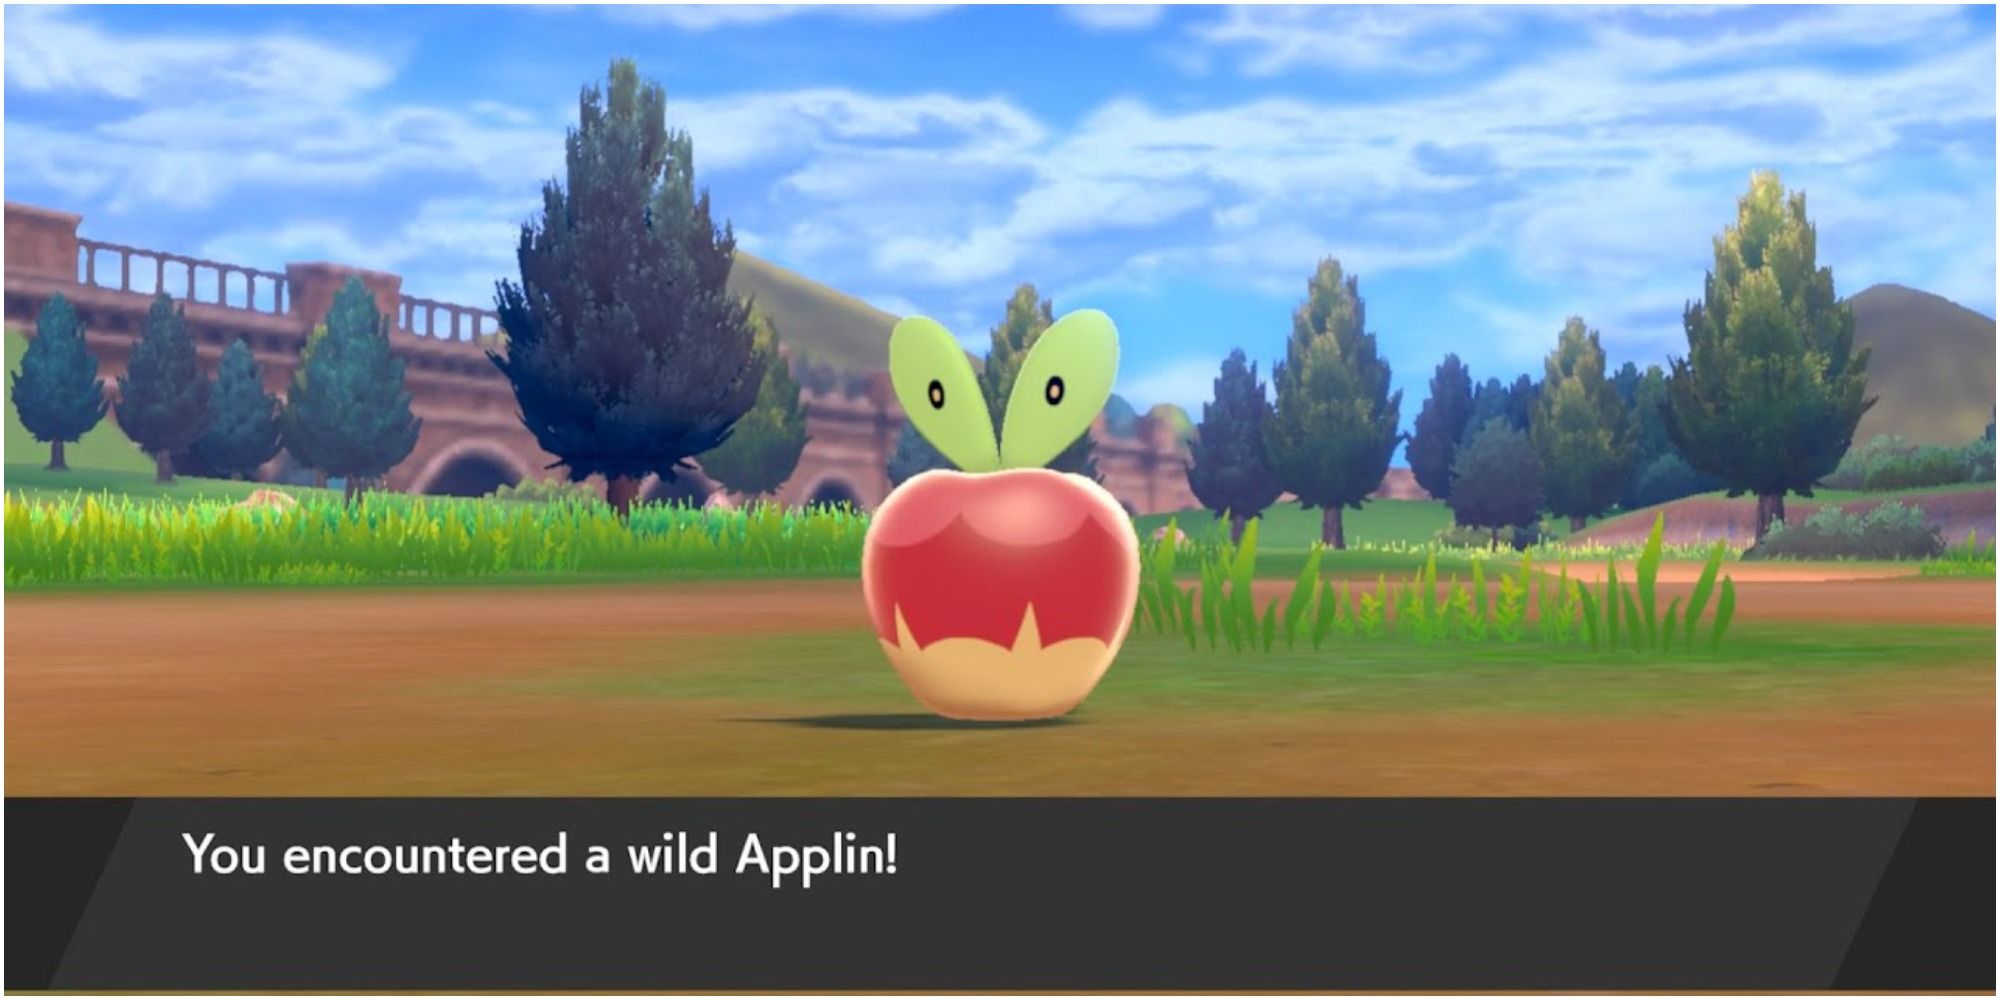 Applin Pokemon Sword and Shield Wild Encounter